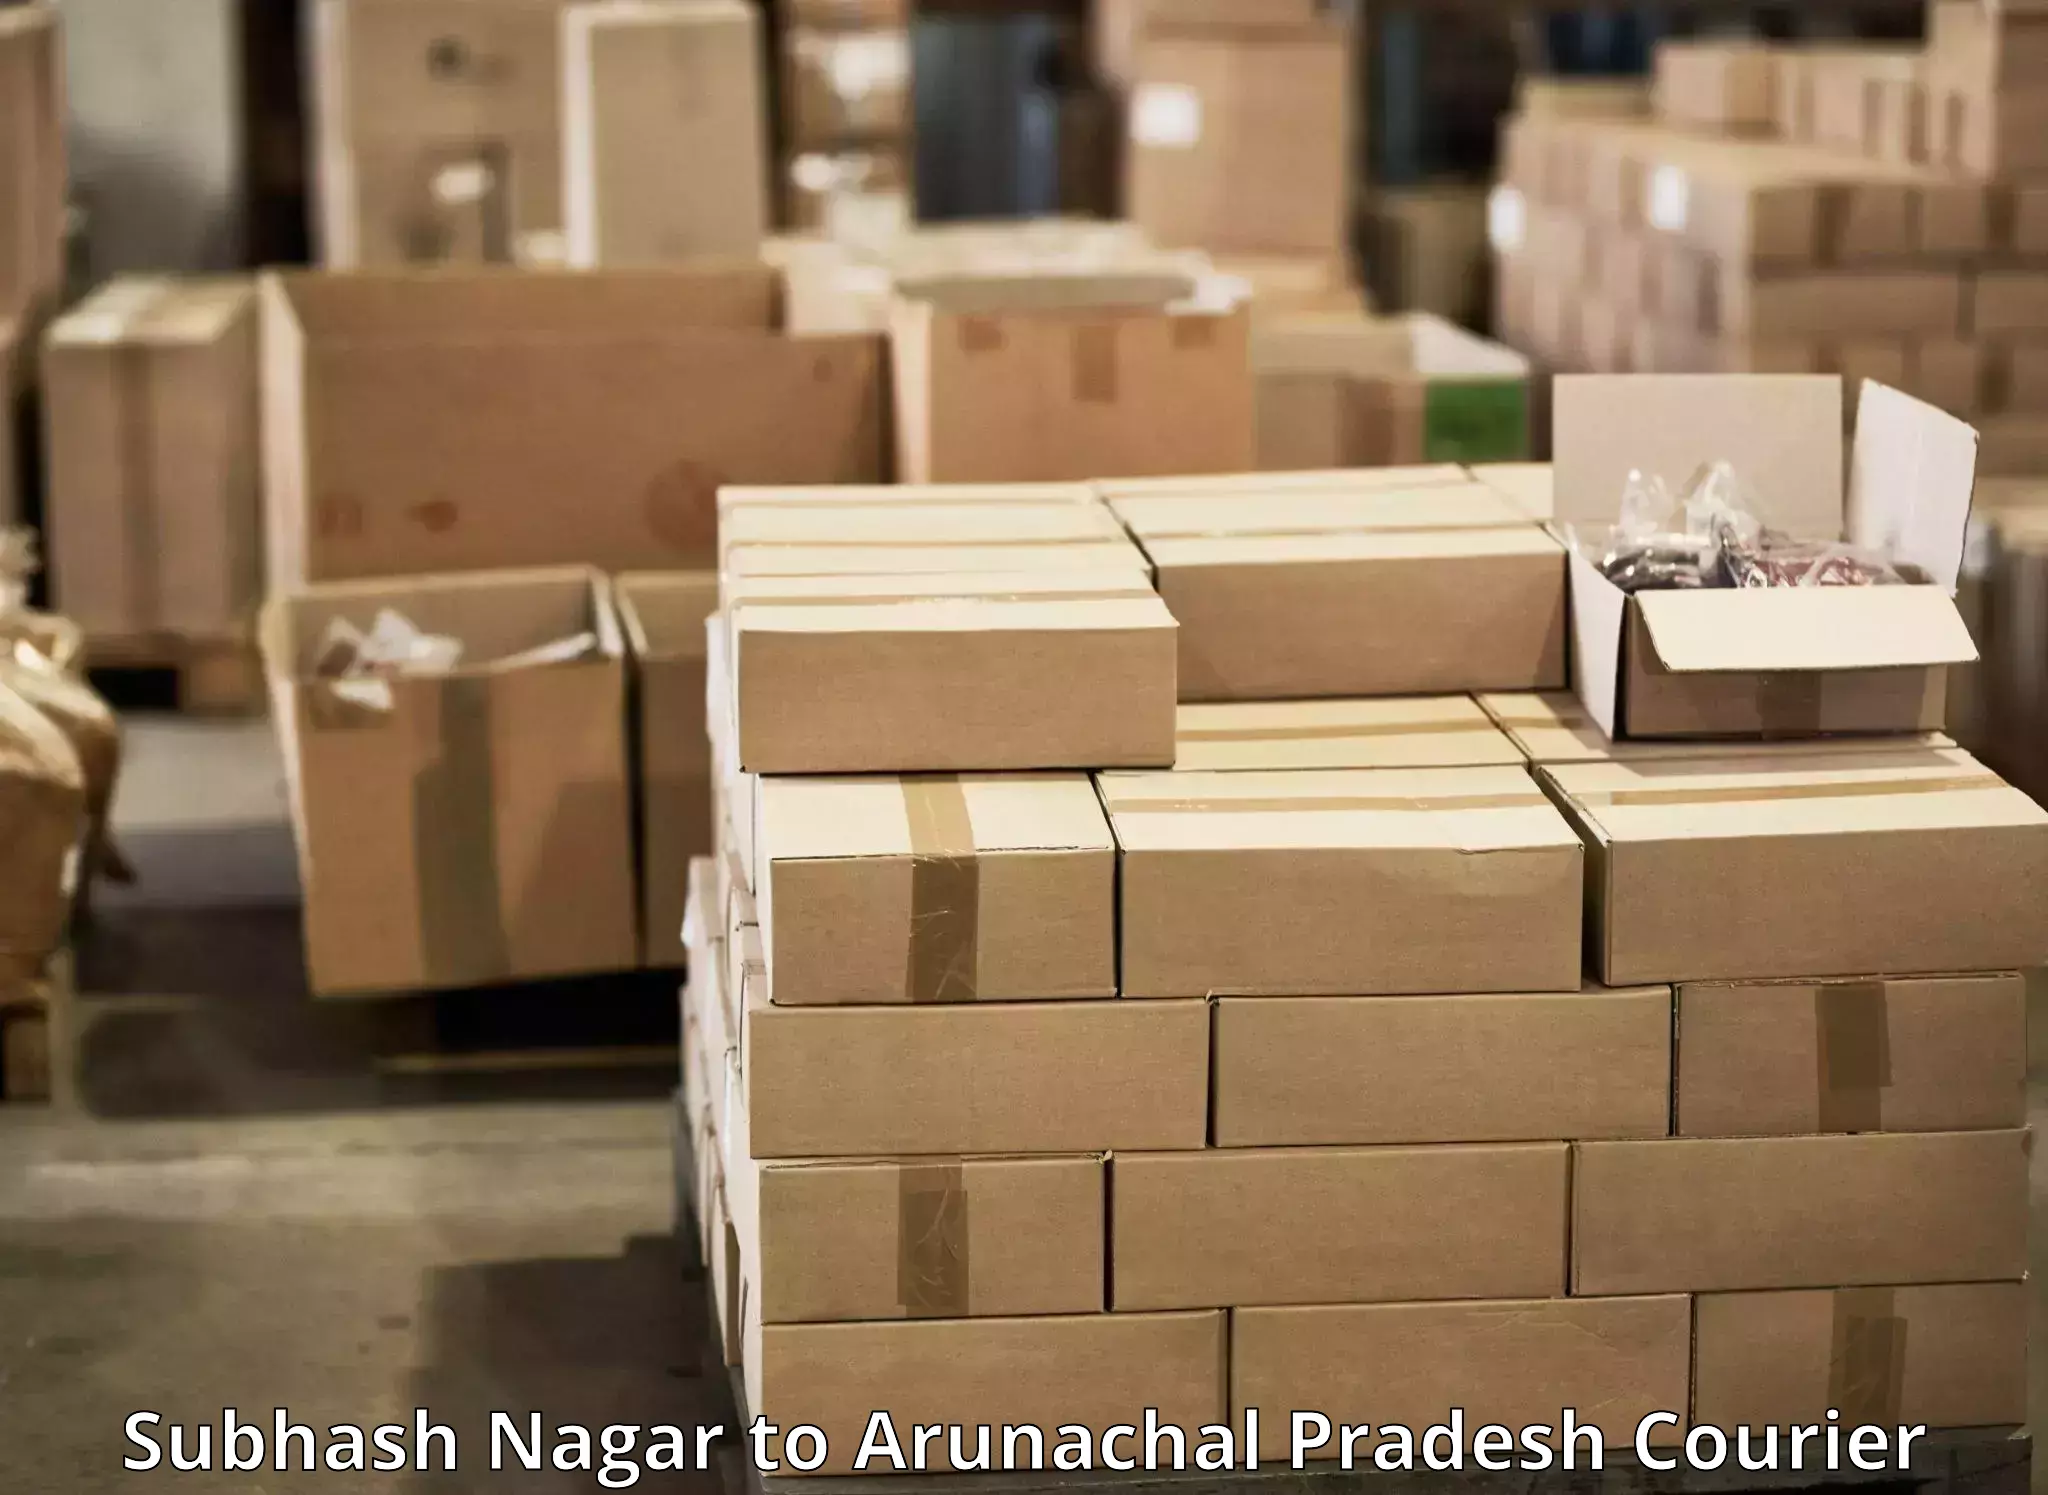 Multi-national courier services Subhash Nagar to Arunachal Pradesh